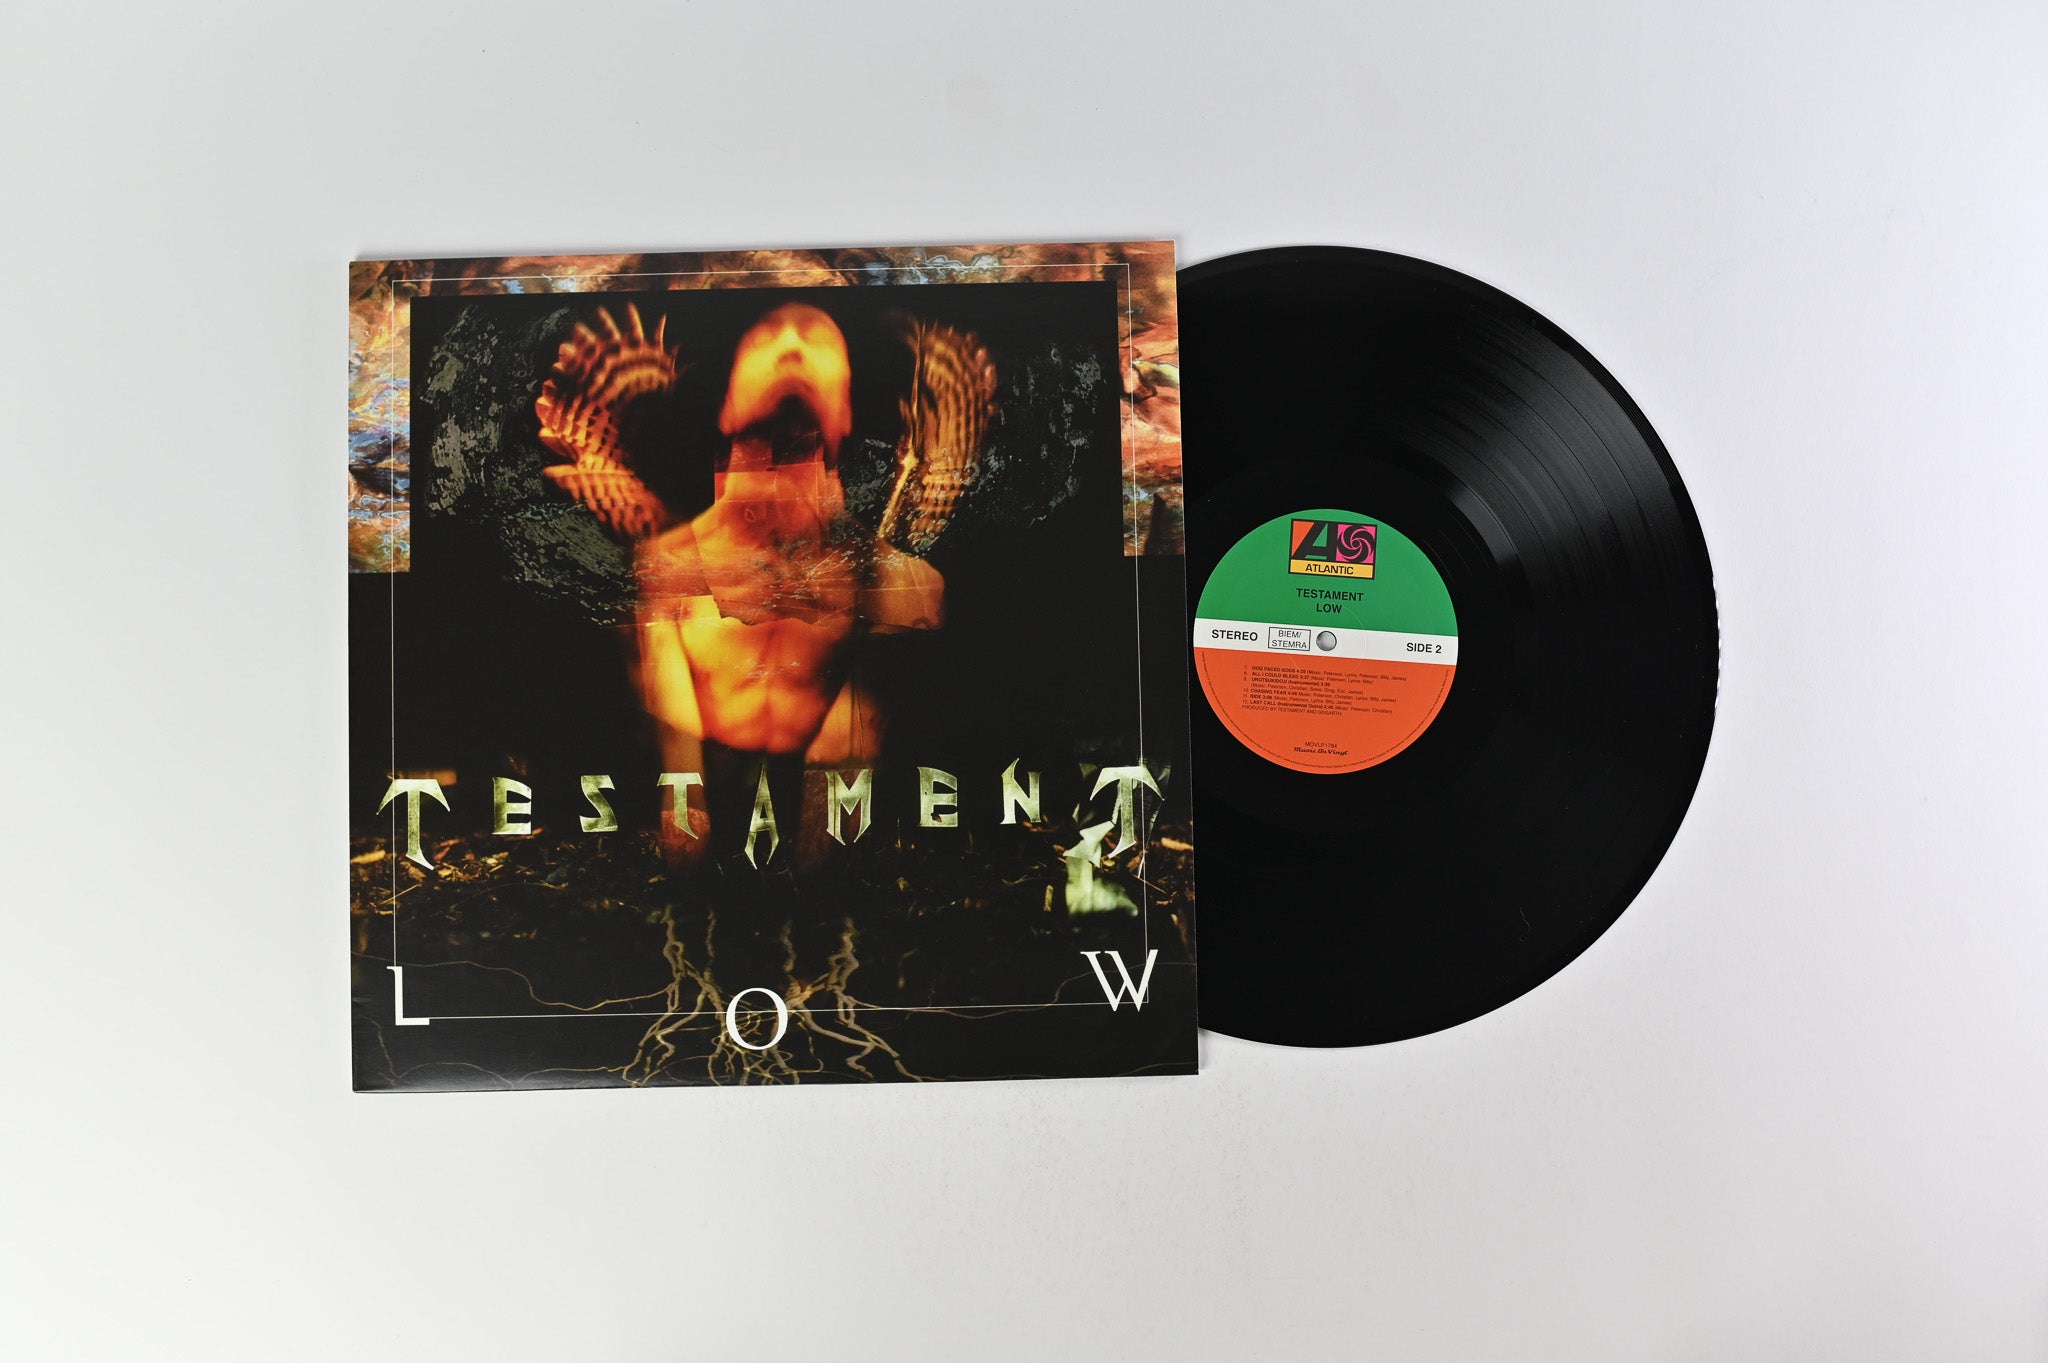 Testament - Low on Music on Vinyl Reissue